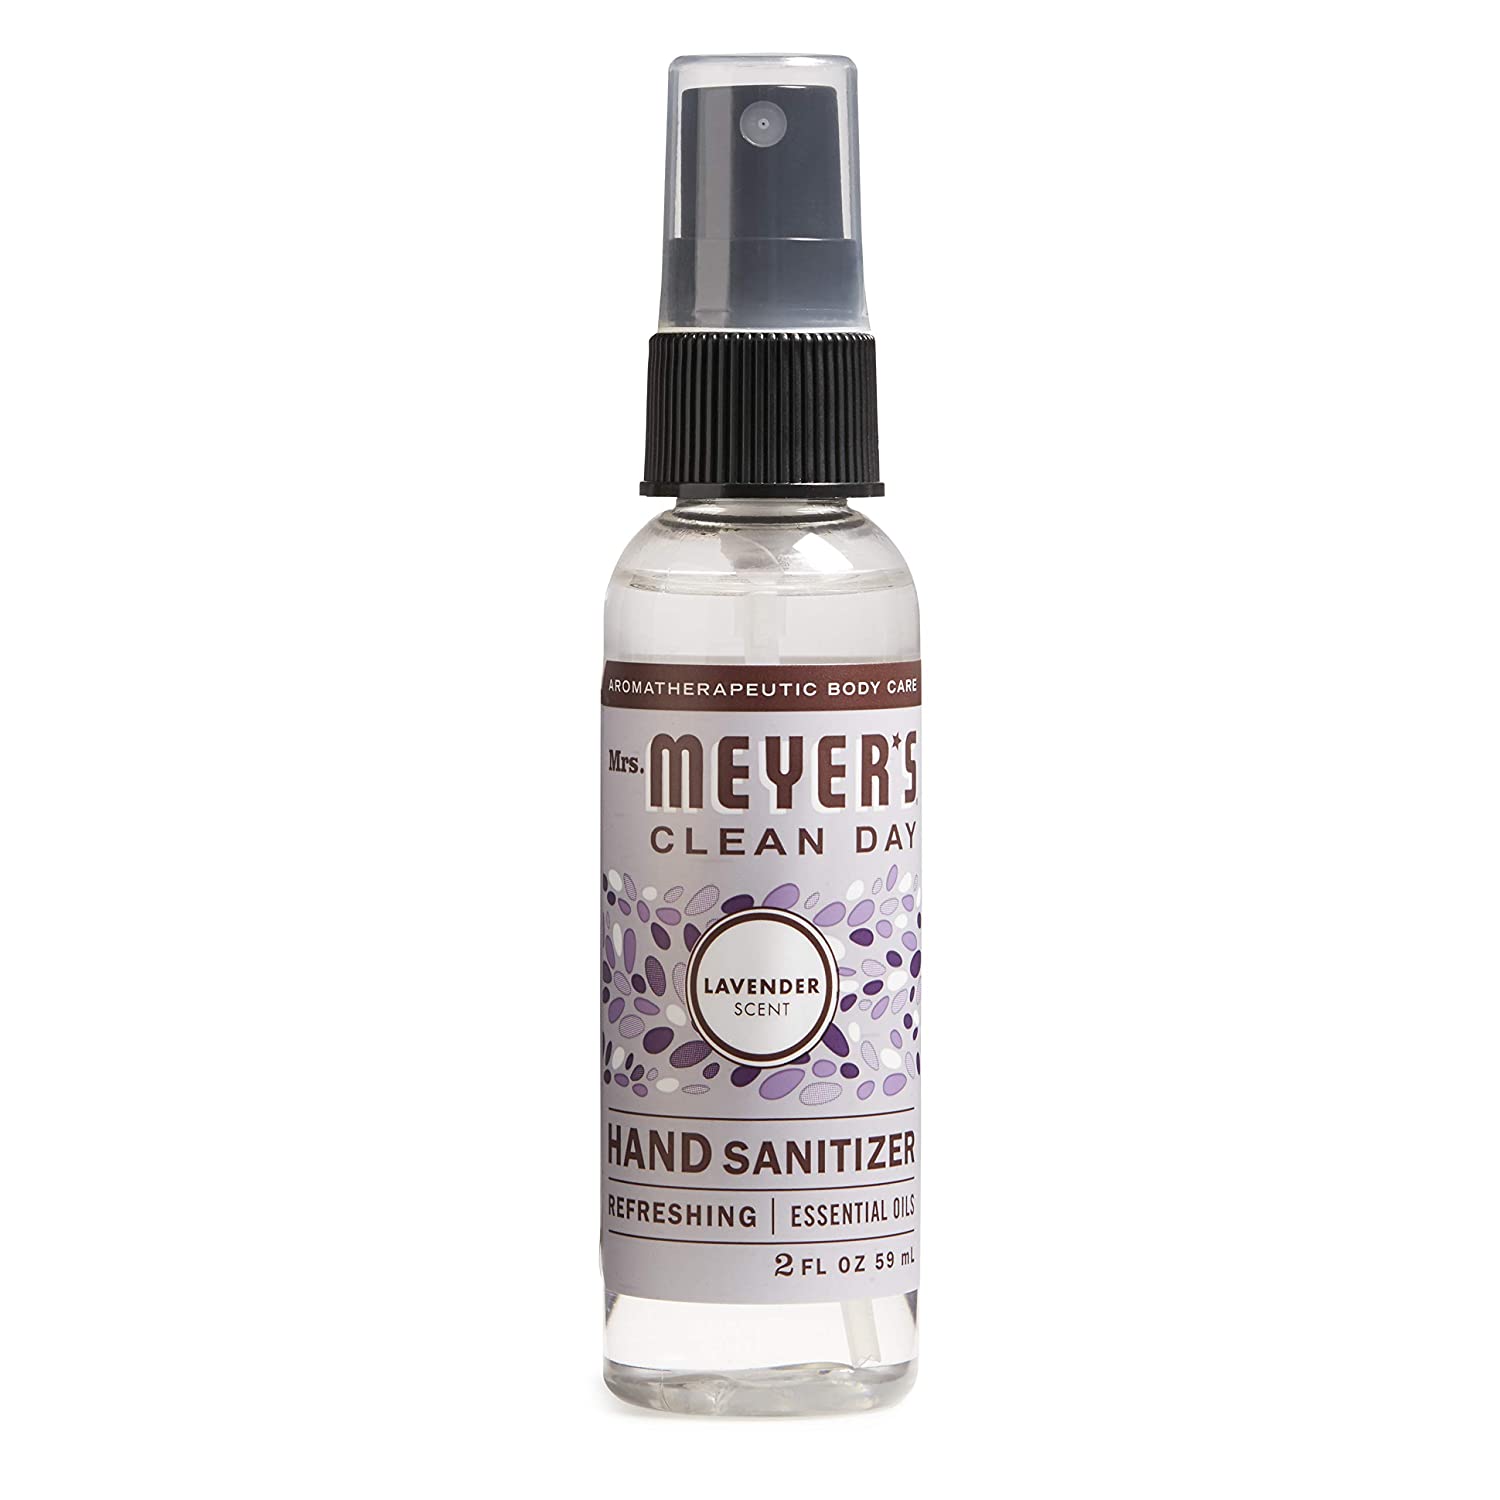 MRS. MEYER'S CLEAN DAY Hand Sanitizer in Lavender